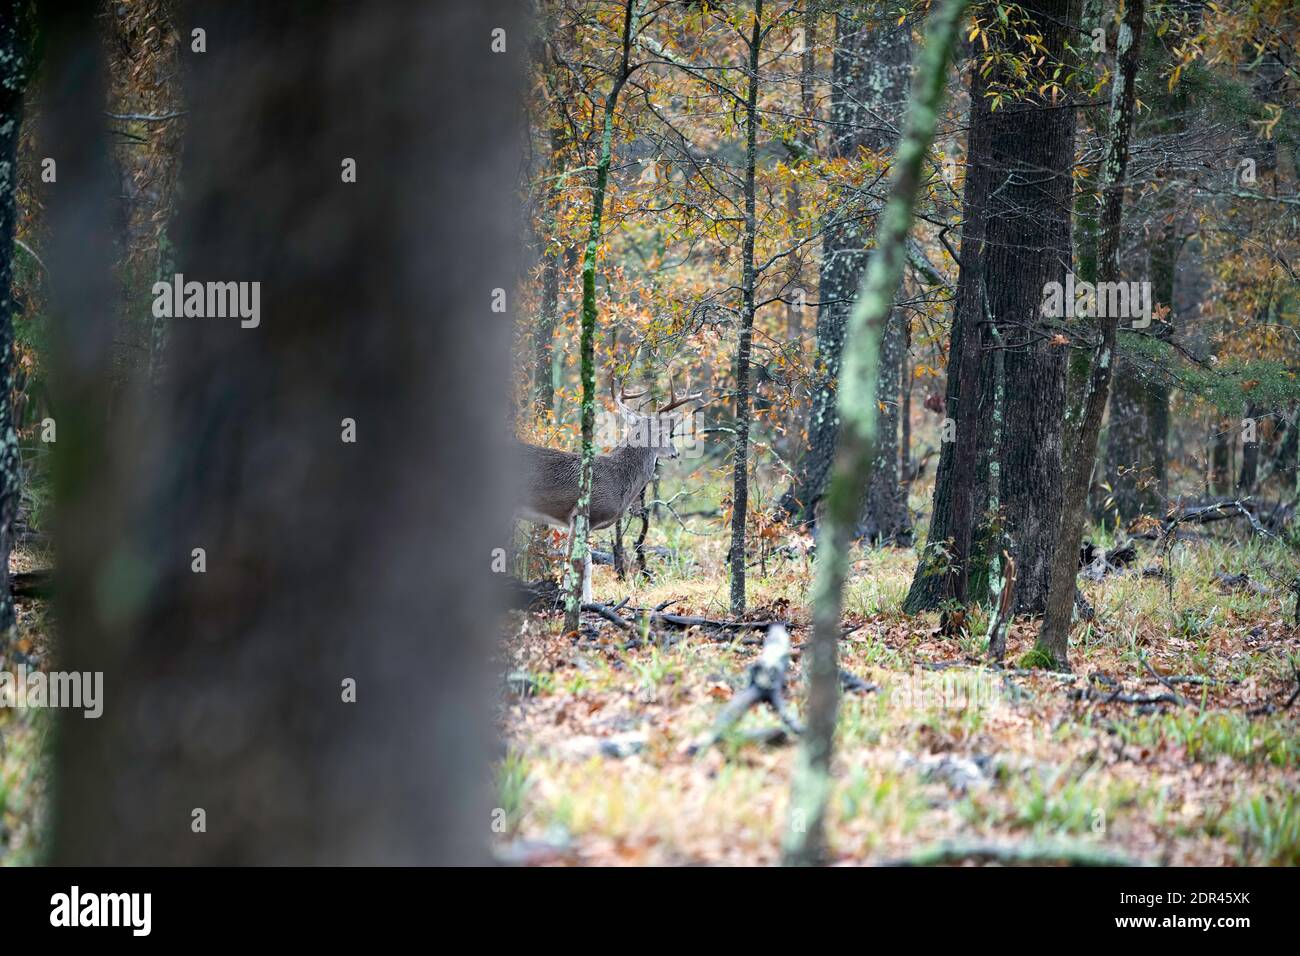 Whitetail (Odocoileus virginianus) Buck Deer Moving Through Woods Stock Photo